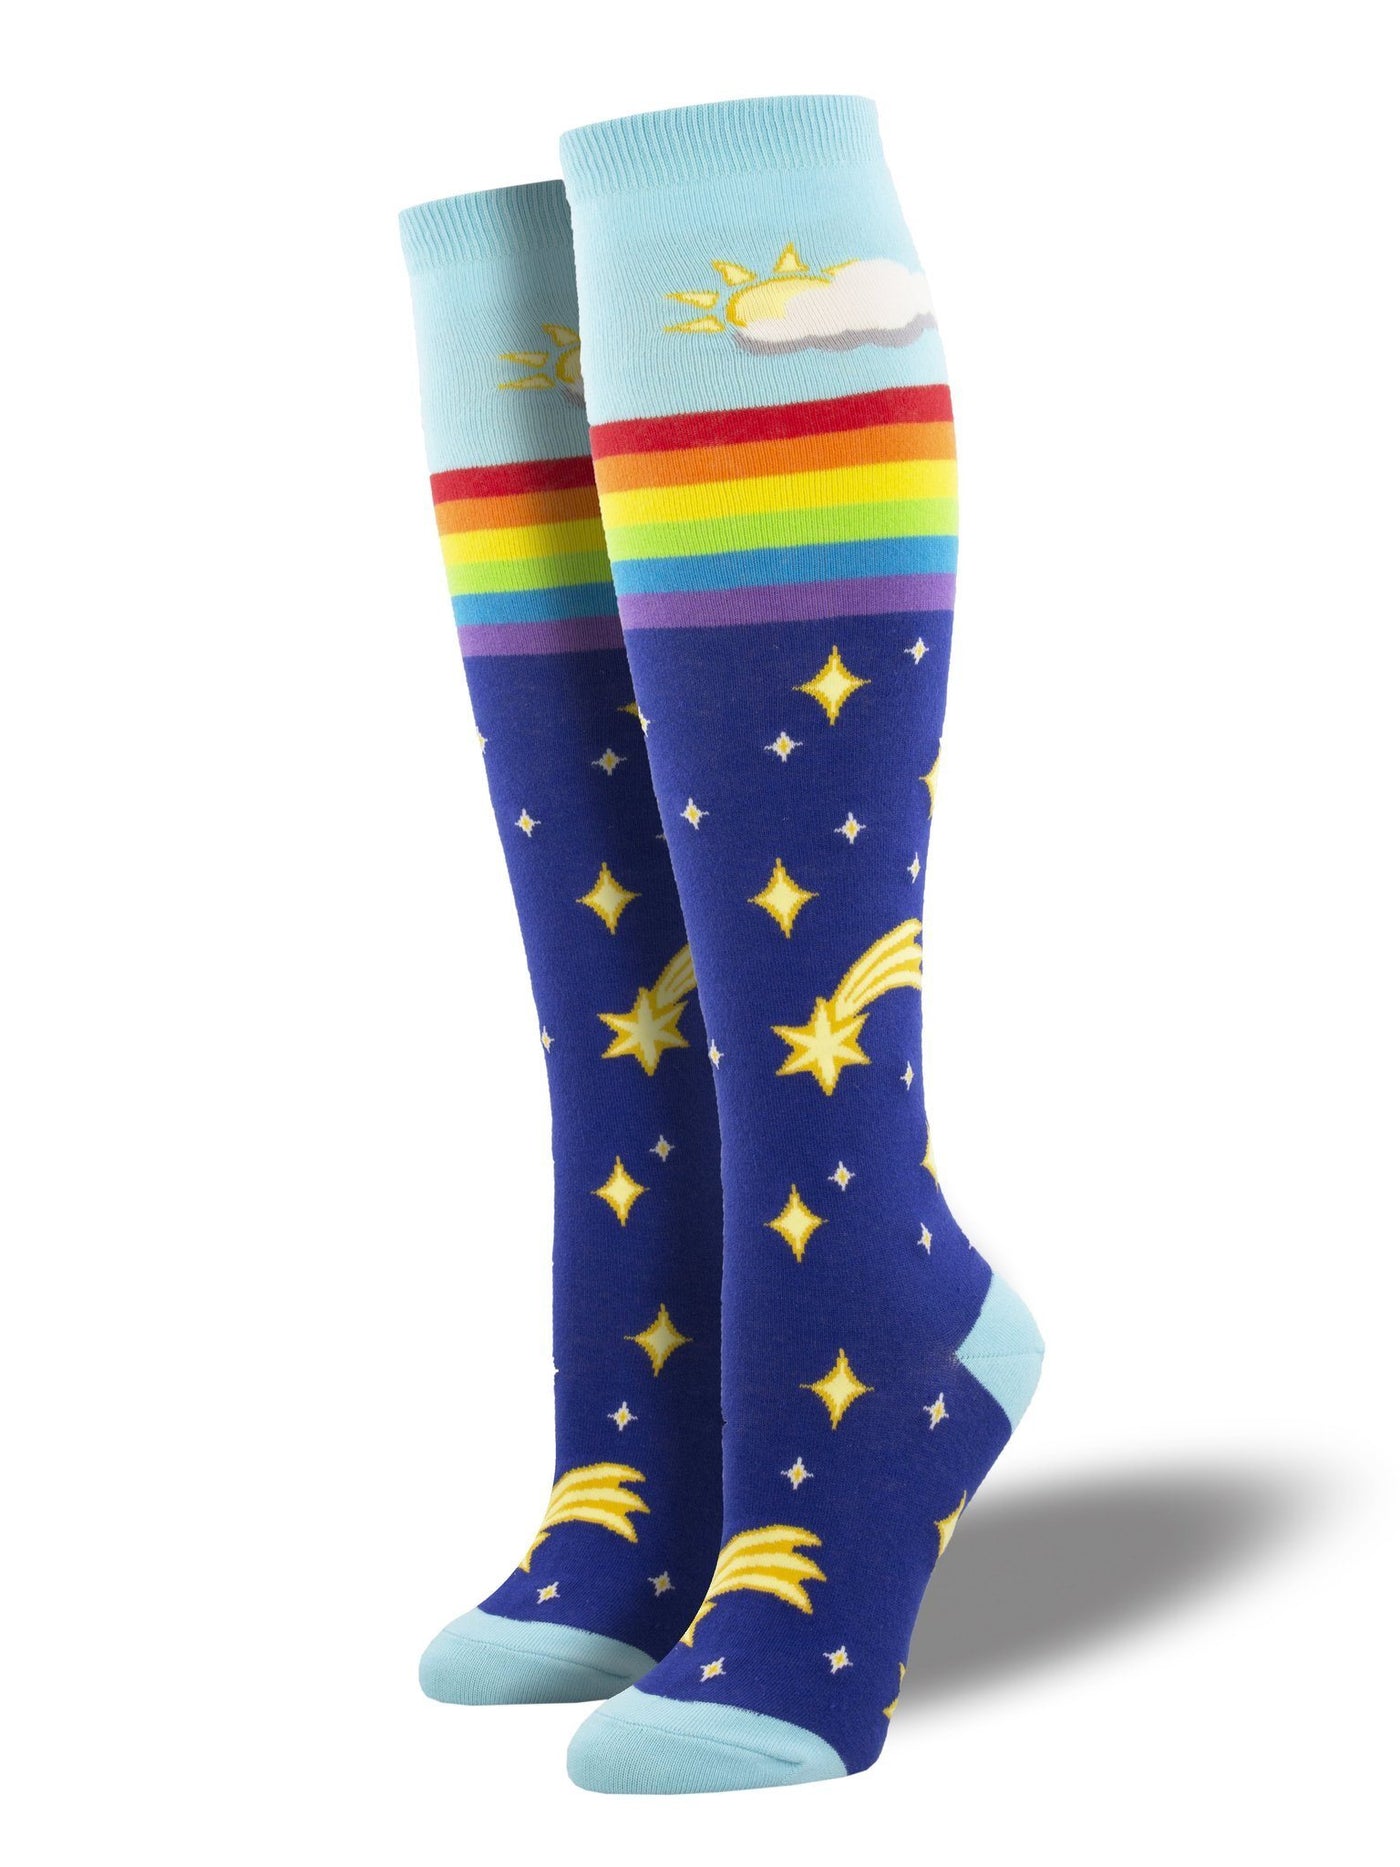 Socksmith - Rainbow Star Knee High Socks | Women's - Knock Your Socks Off